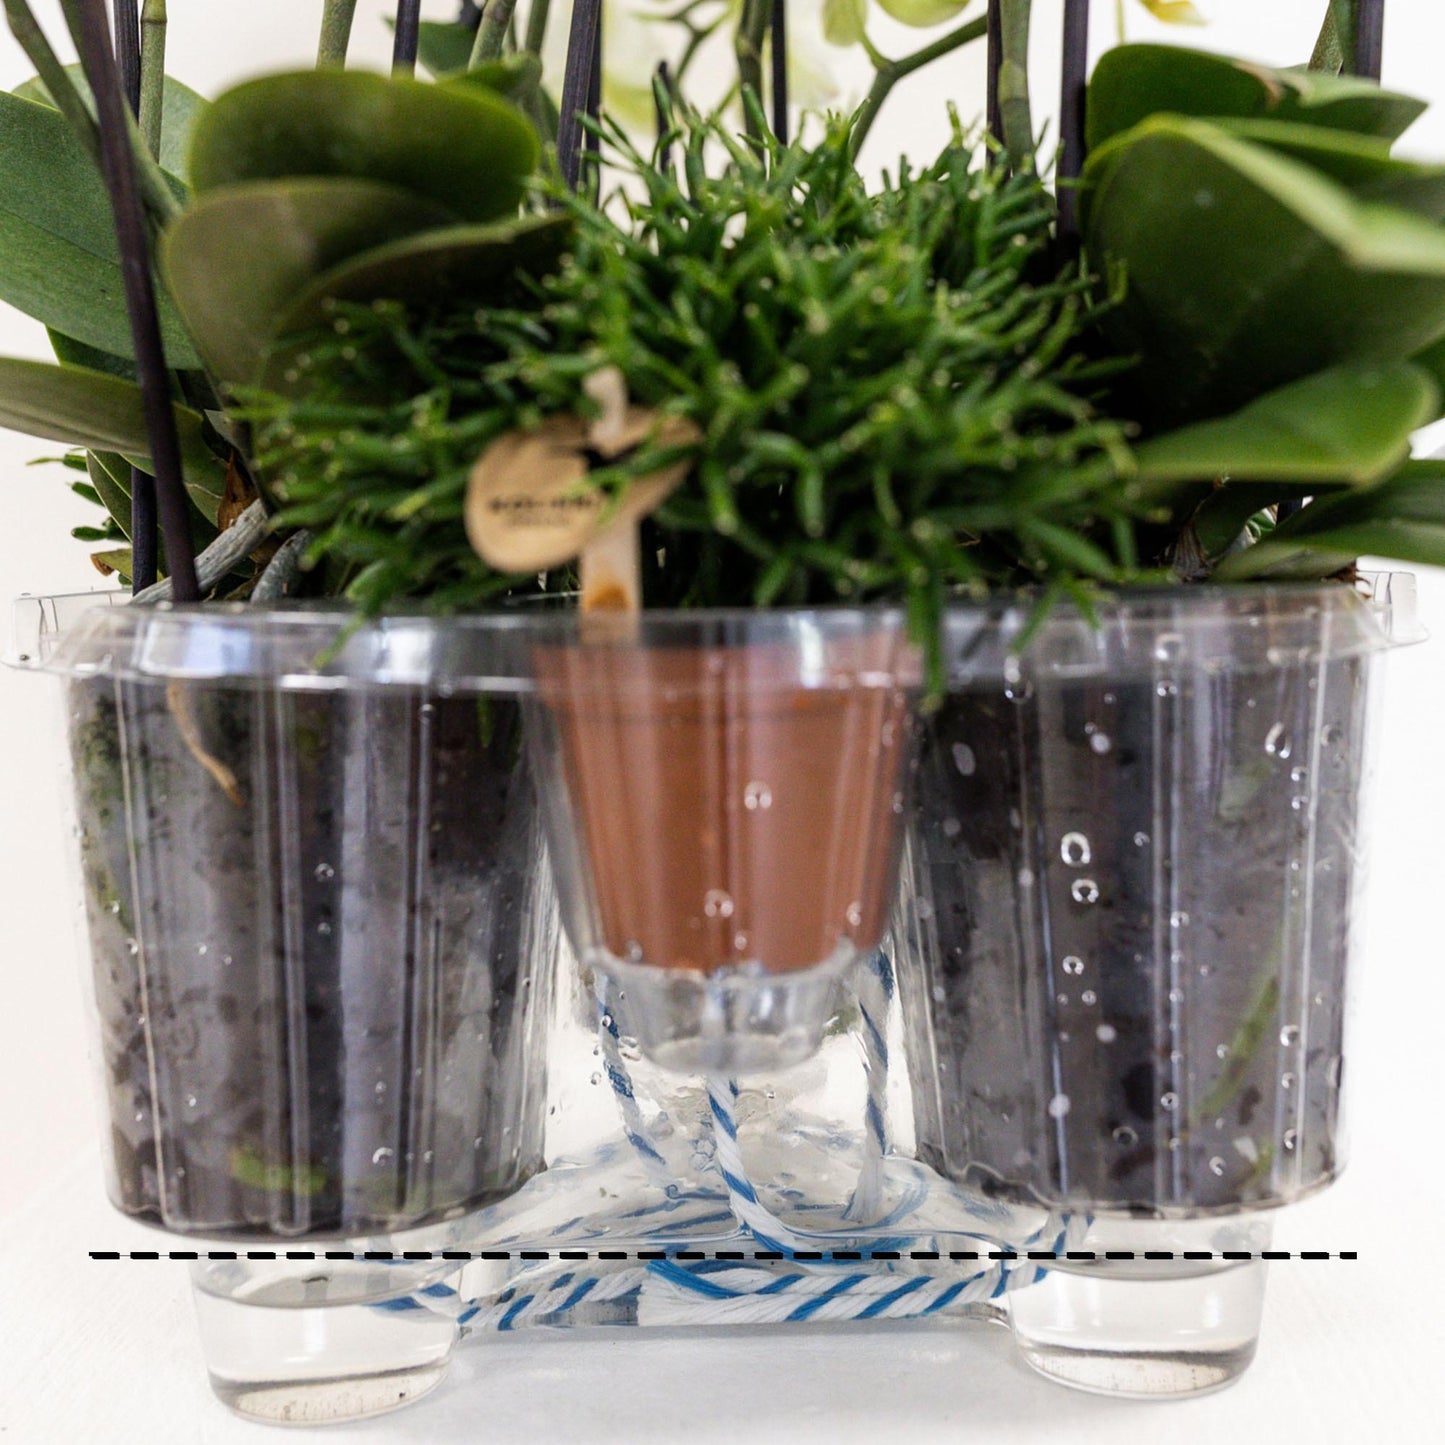 Kolibri Orchids | witte orchideeënset in Reed Basket incl. waterreservoir | drie witte orchideeën Ghent 12cm | Mono Bouquet wit met zelfvoorzienend waterreservoir.